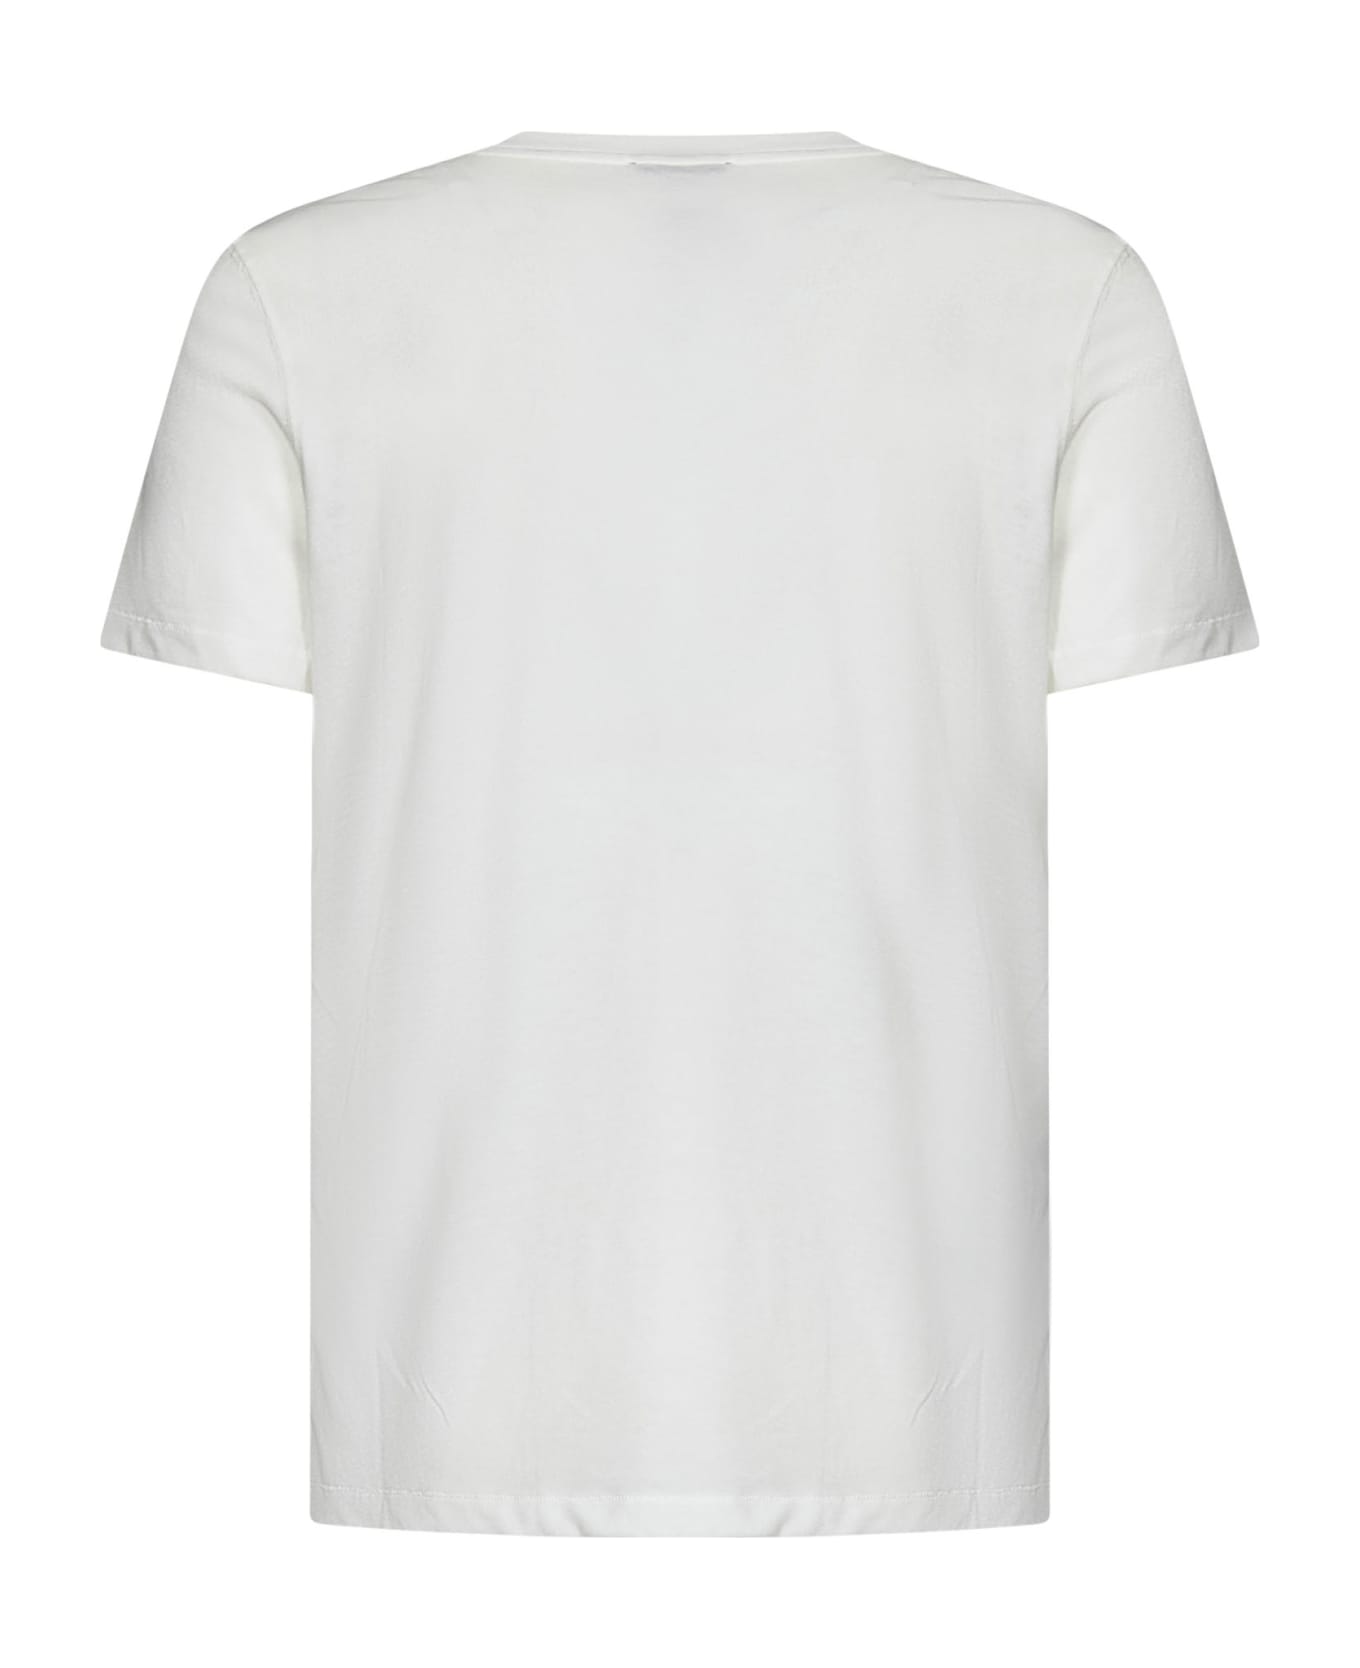 Tom Ford T-shirt - White シャツ